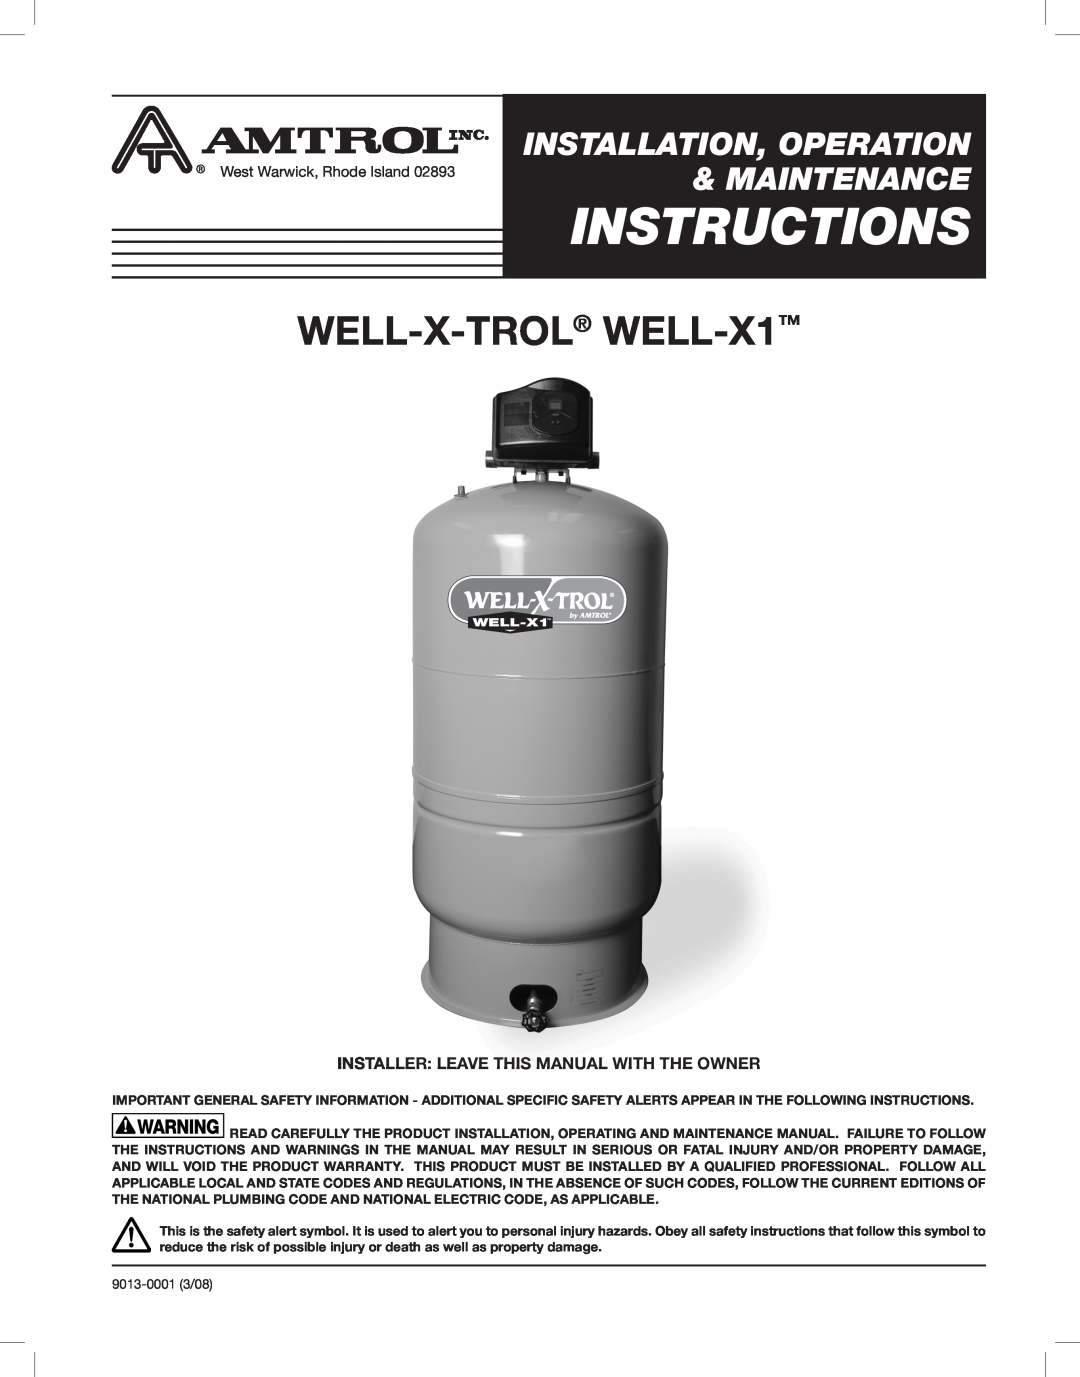 Amtrol warranty Instructions, WELL-X-TROL WELL-X1, Installation, Operation, Maintenance 